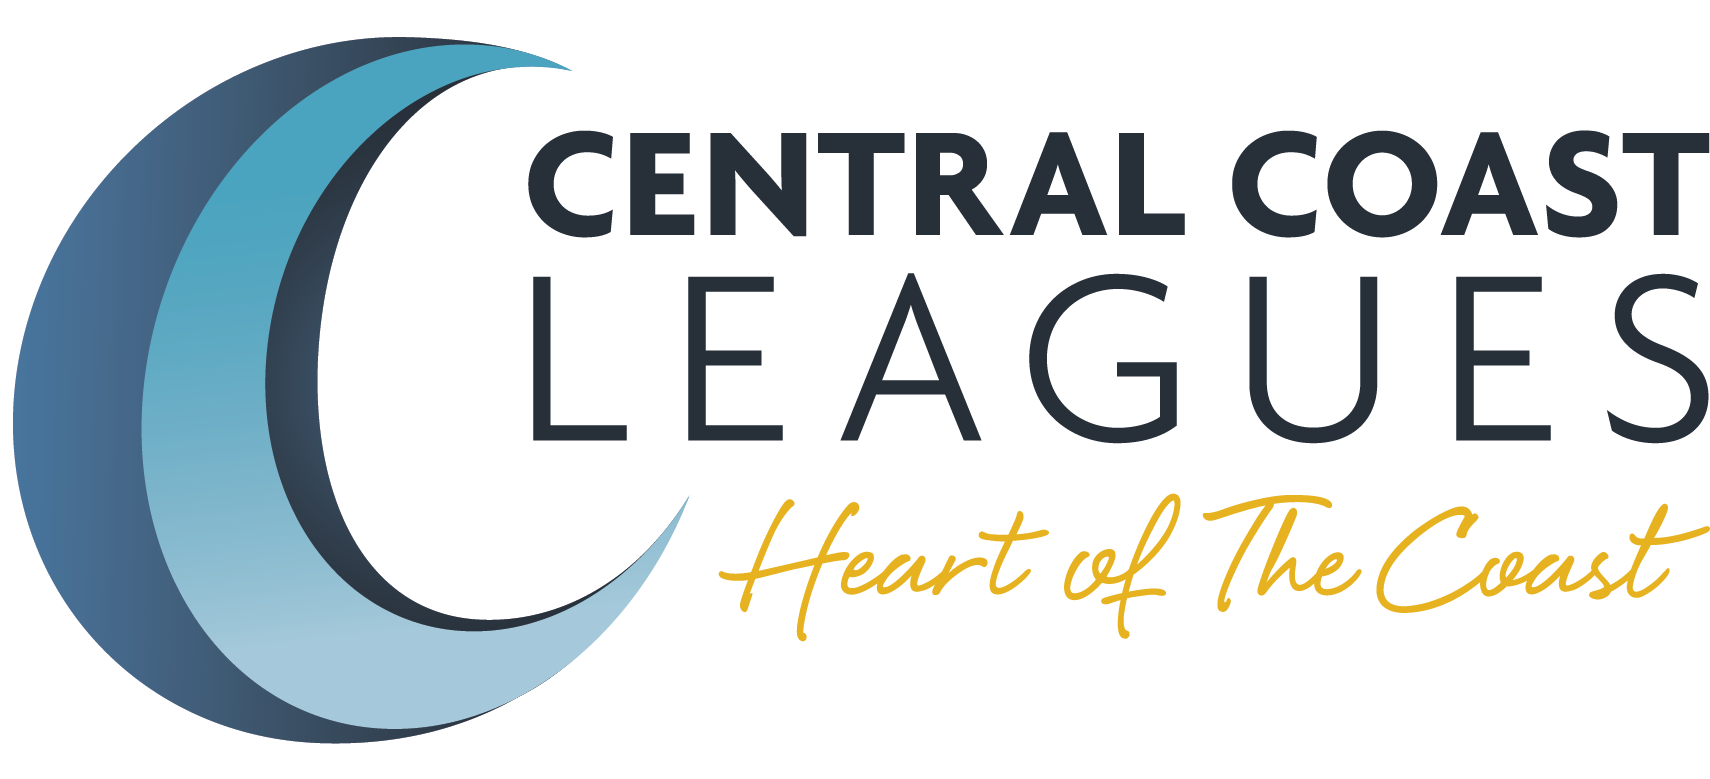 Central Coast Leagues Club